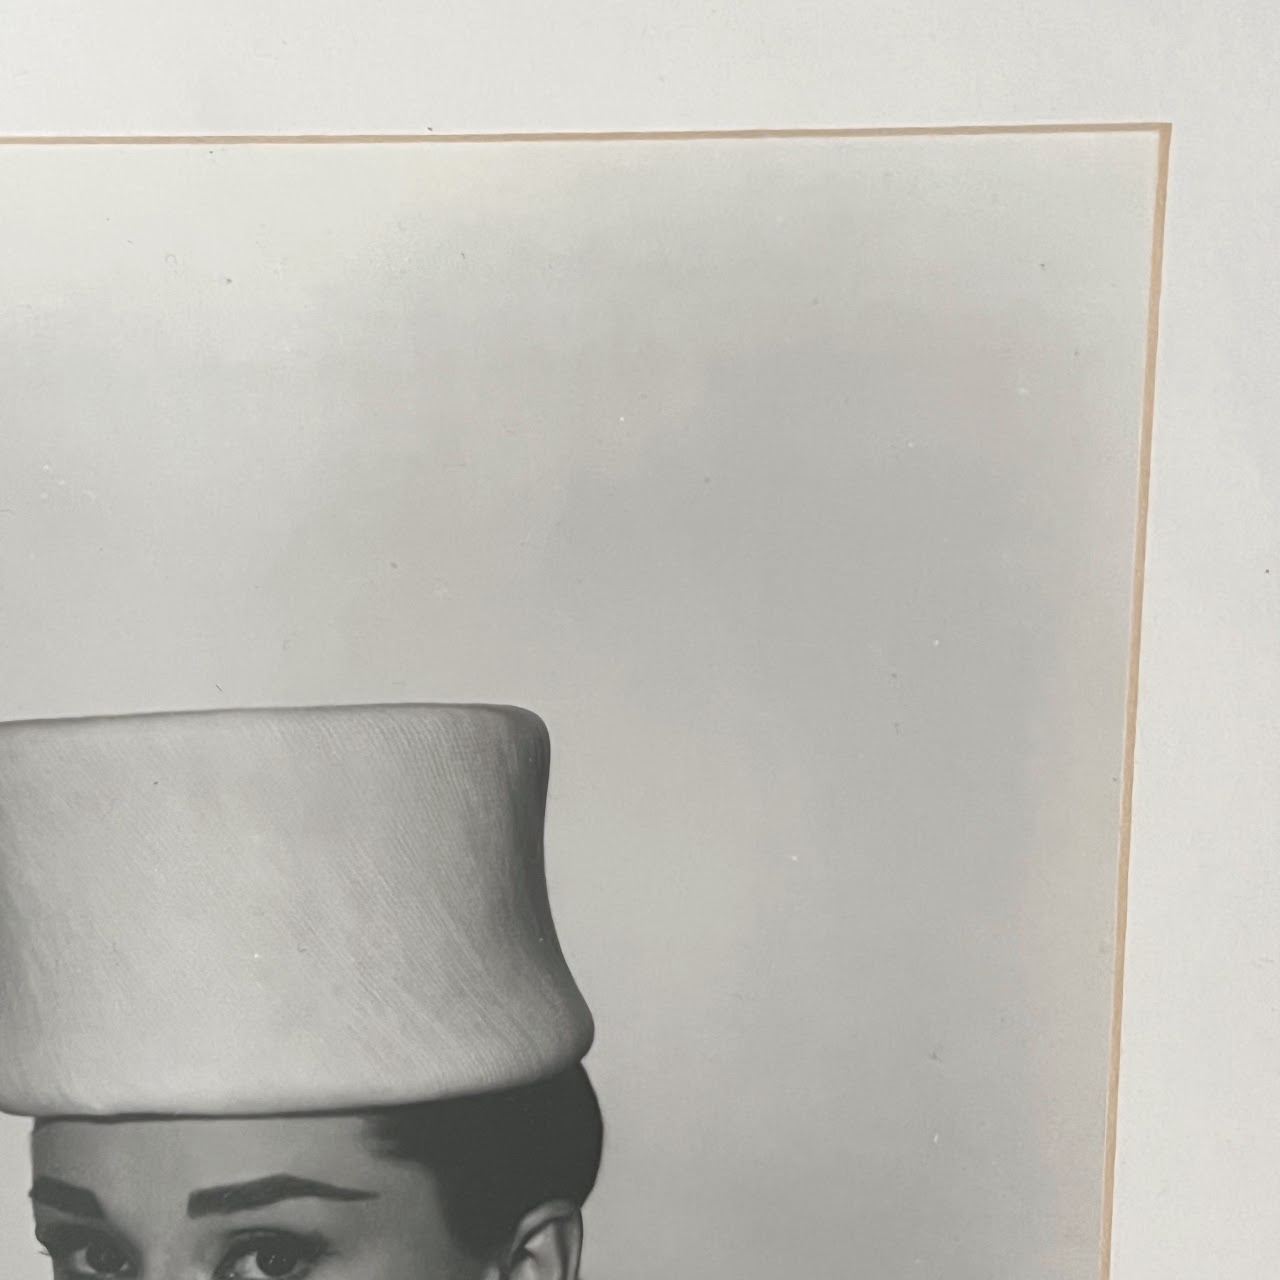 Audrey Hepburn 'Funny Face' Publicity Photograph #1